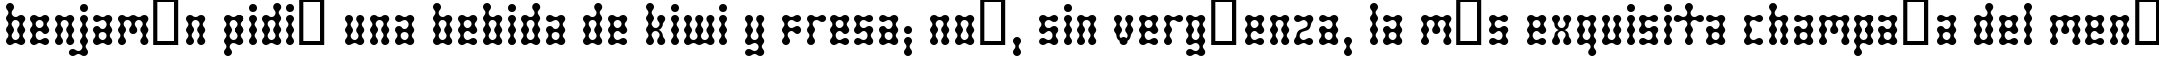 Пример написания шрифтом Skeletor Stance текста на испанском